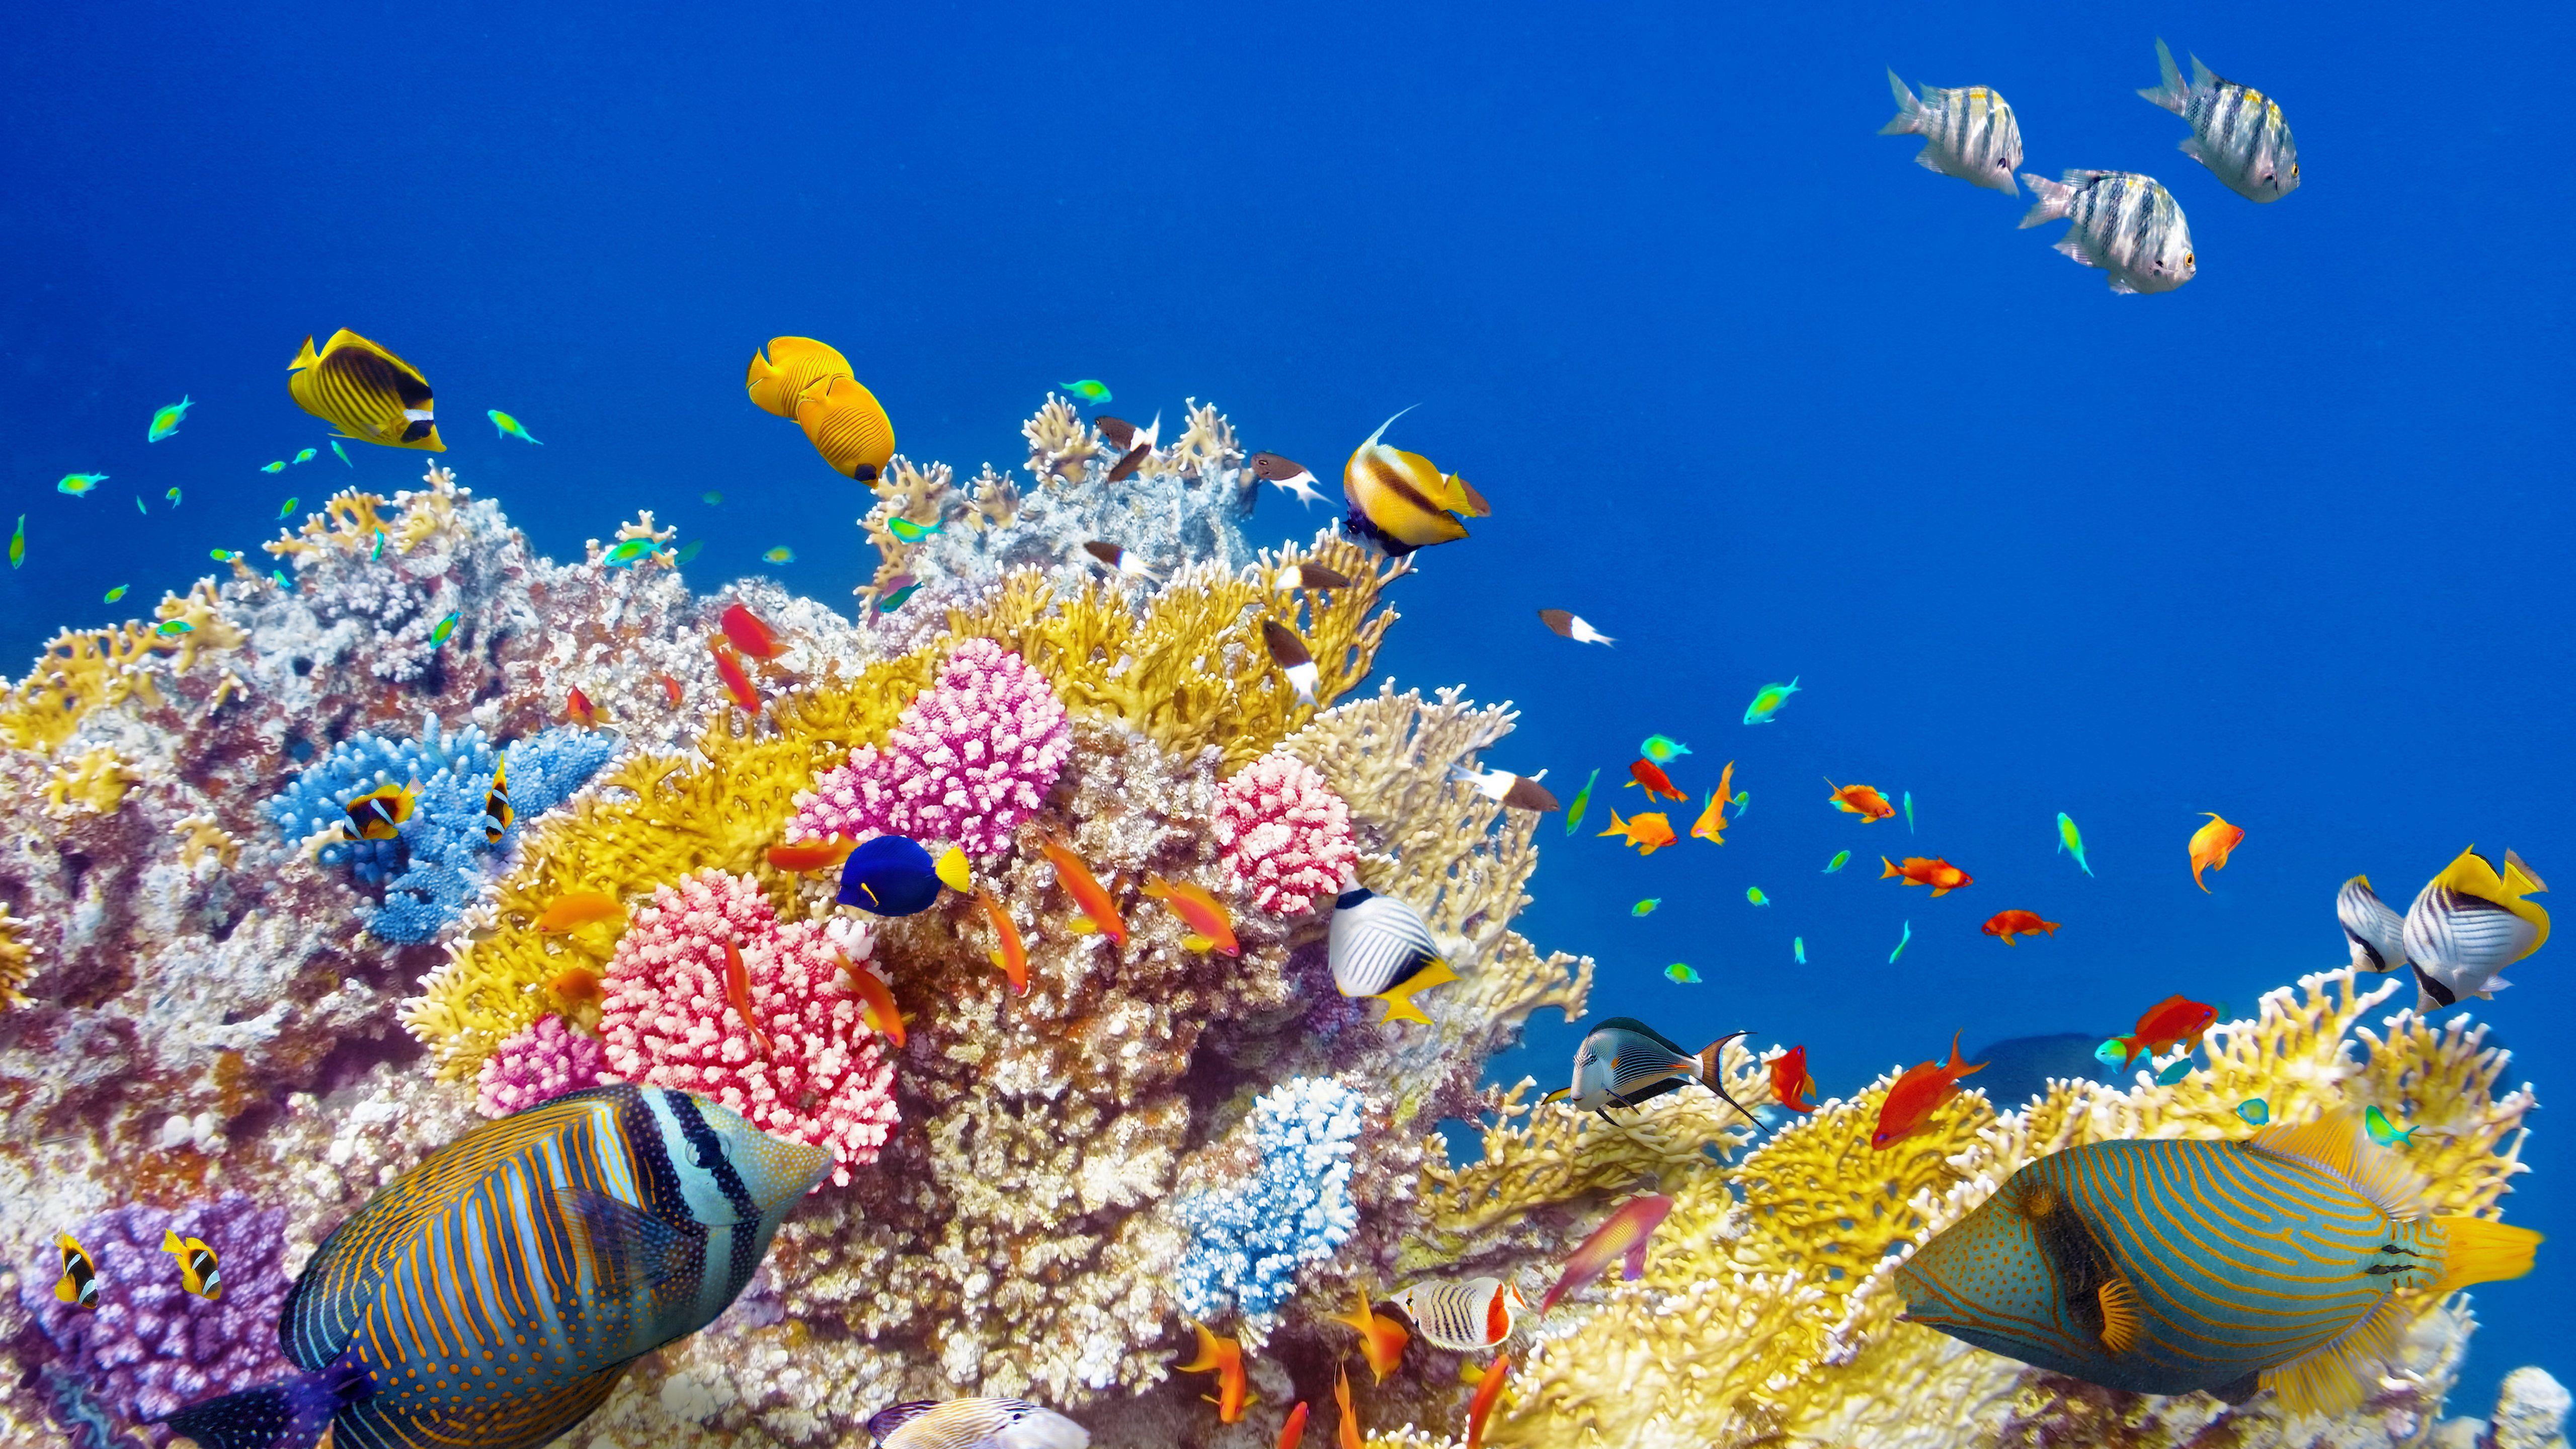 Coral Reef Desktop Wallpapers - Top Free Coral Reef Desktop Backgrounds ...